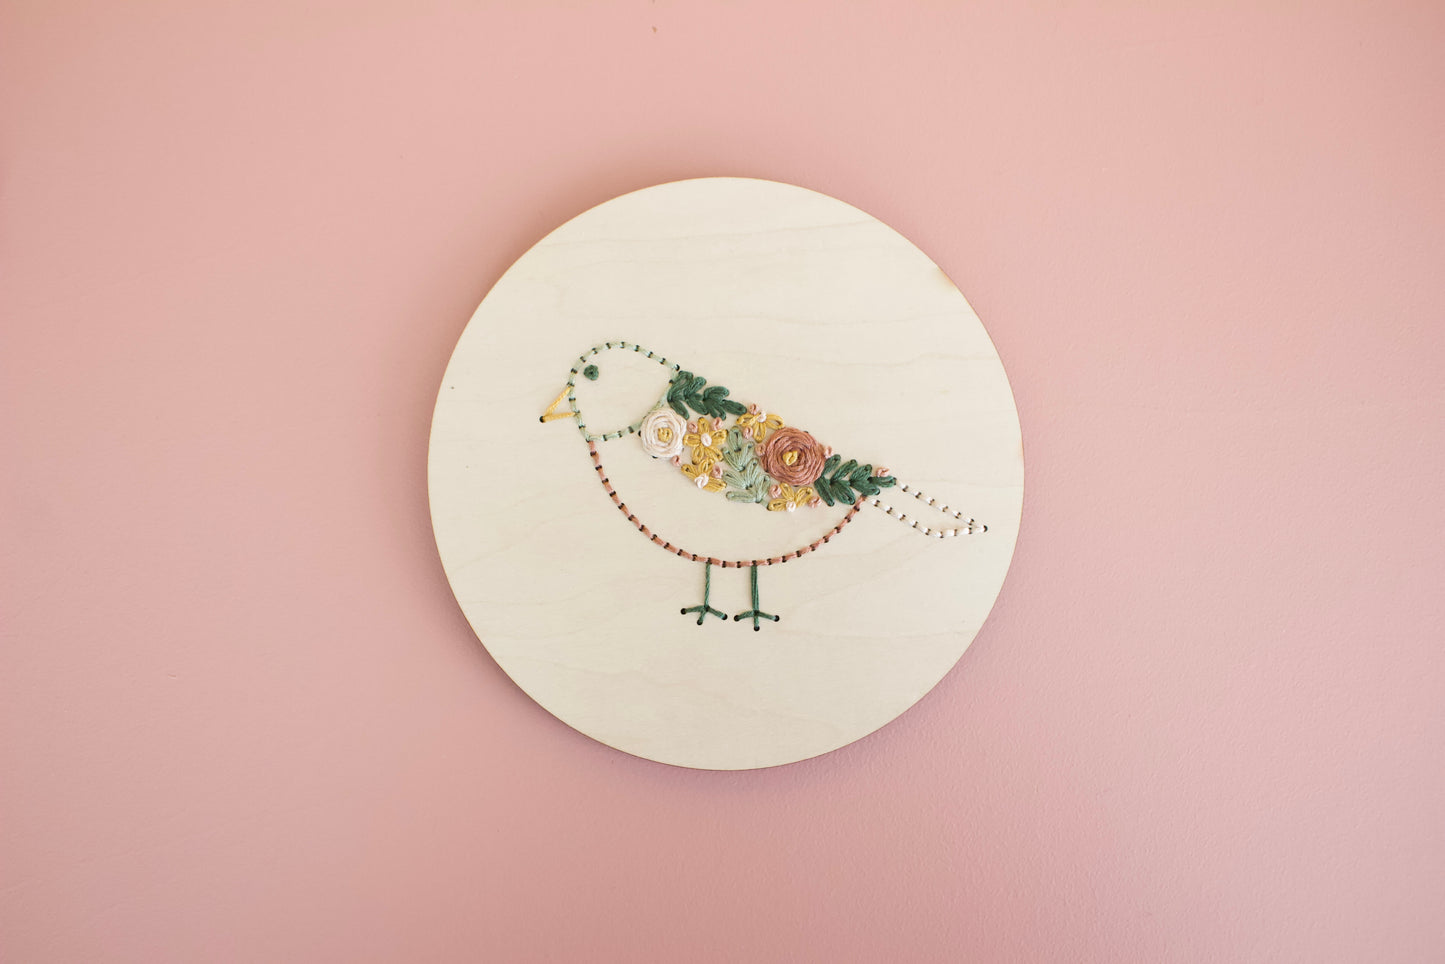 Wood Embroidery Kit - Bird